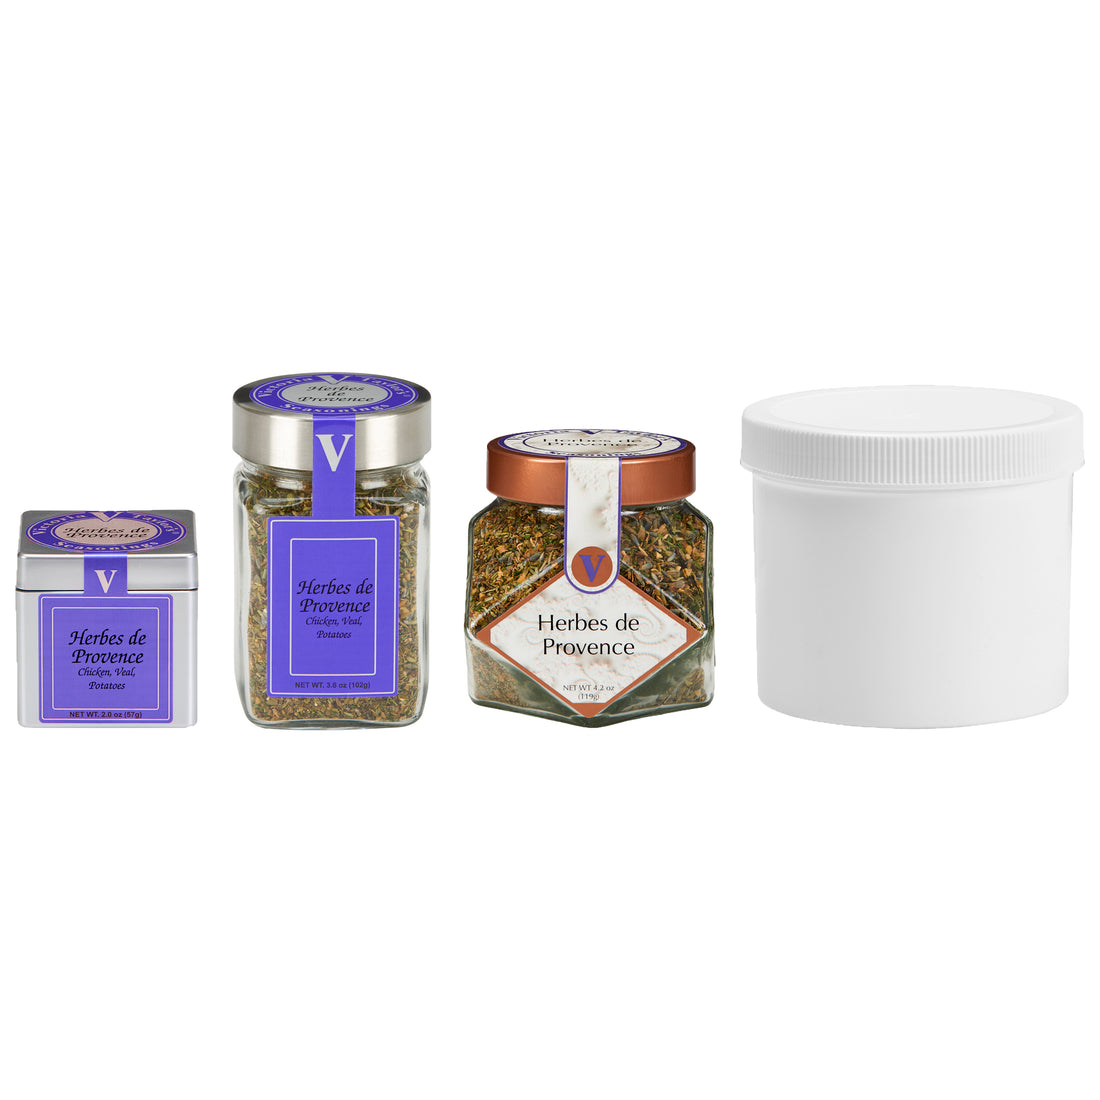 Herbes de Provence – Calicutts Spice Co.